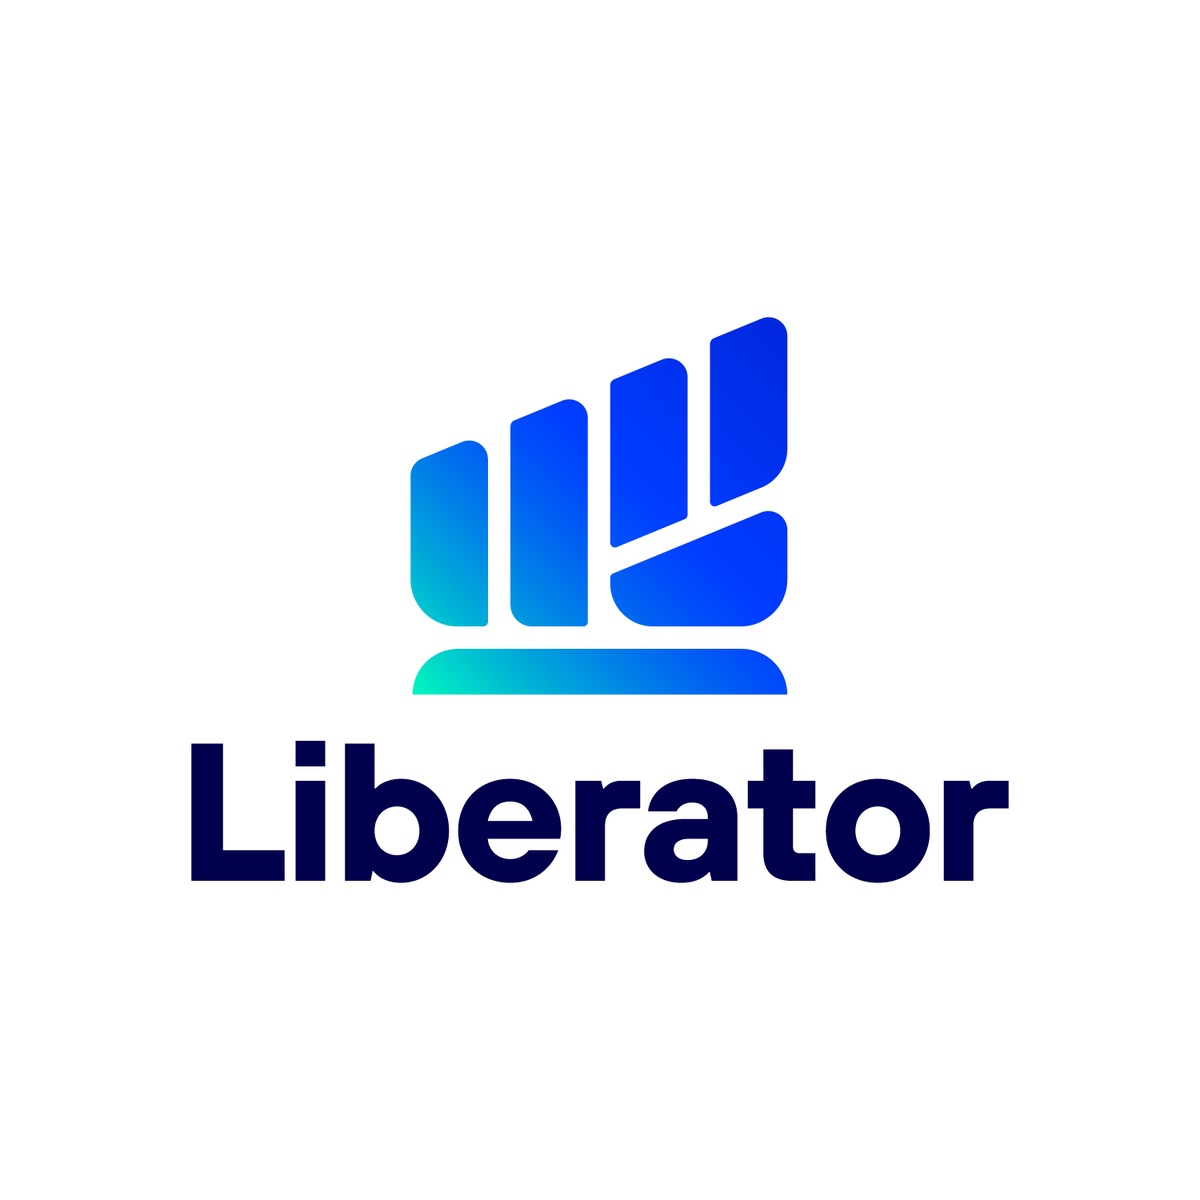 Liberator จับมือ Super Trader จัดกิจกรรม The Futures Trade Class สอนเทรด TFEX ฟรีครั้งแรก! ปูทางสู่ Liberator Academy เสิร์ฟความรู้ดีๆ ต่อเนื่อง